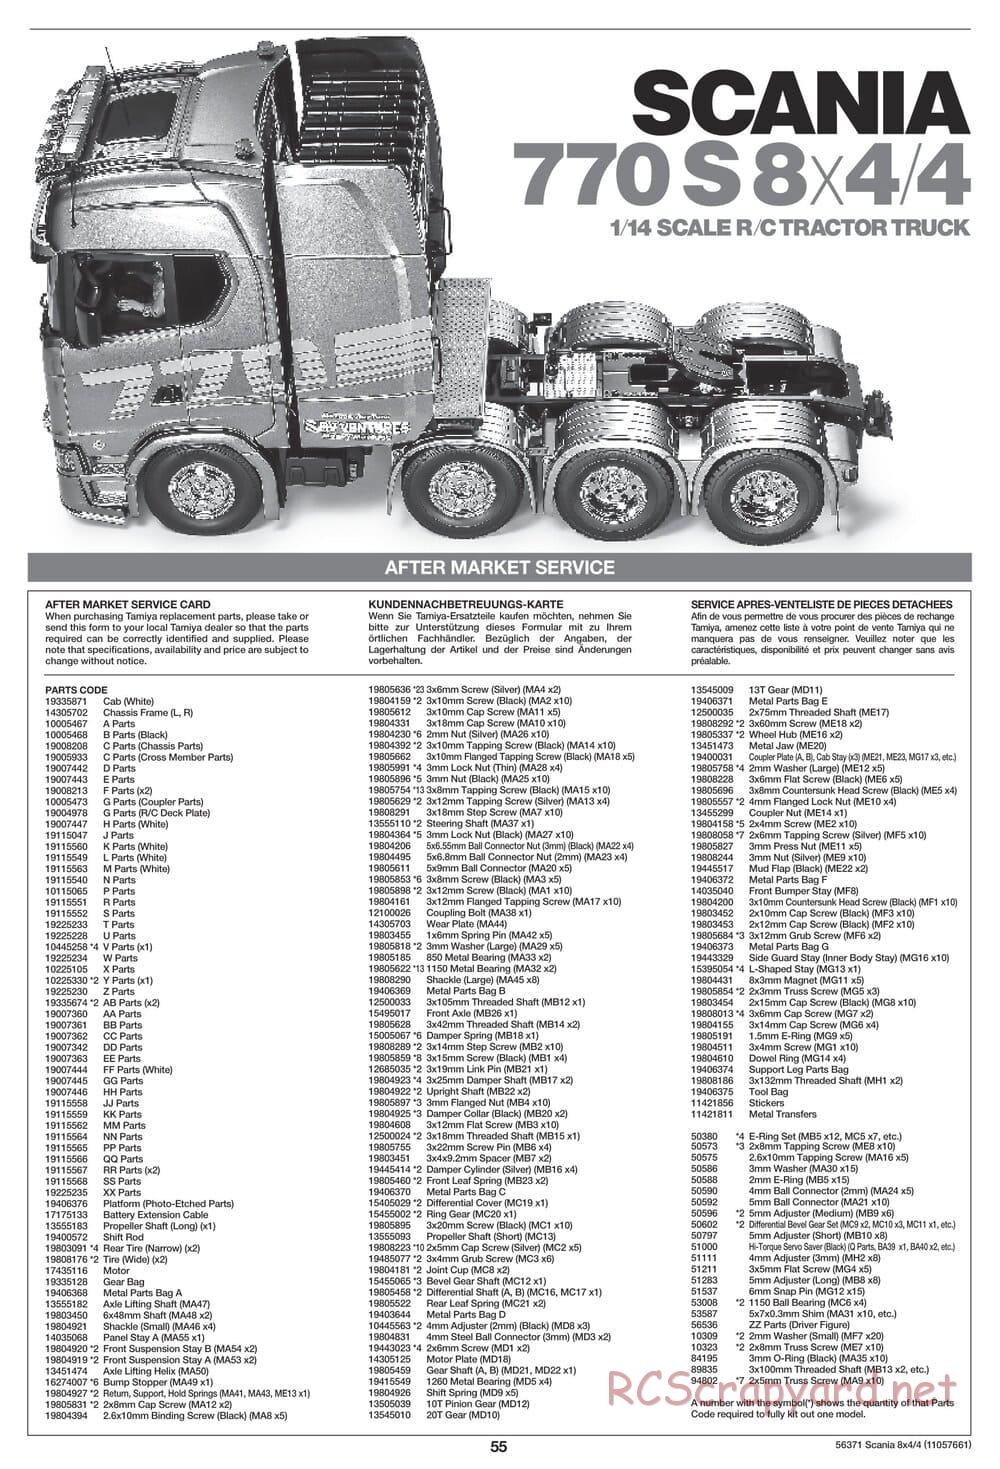 Tamiya - Scania 770 S 8x4/4 Chassis - Manual - Page 55